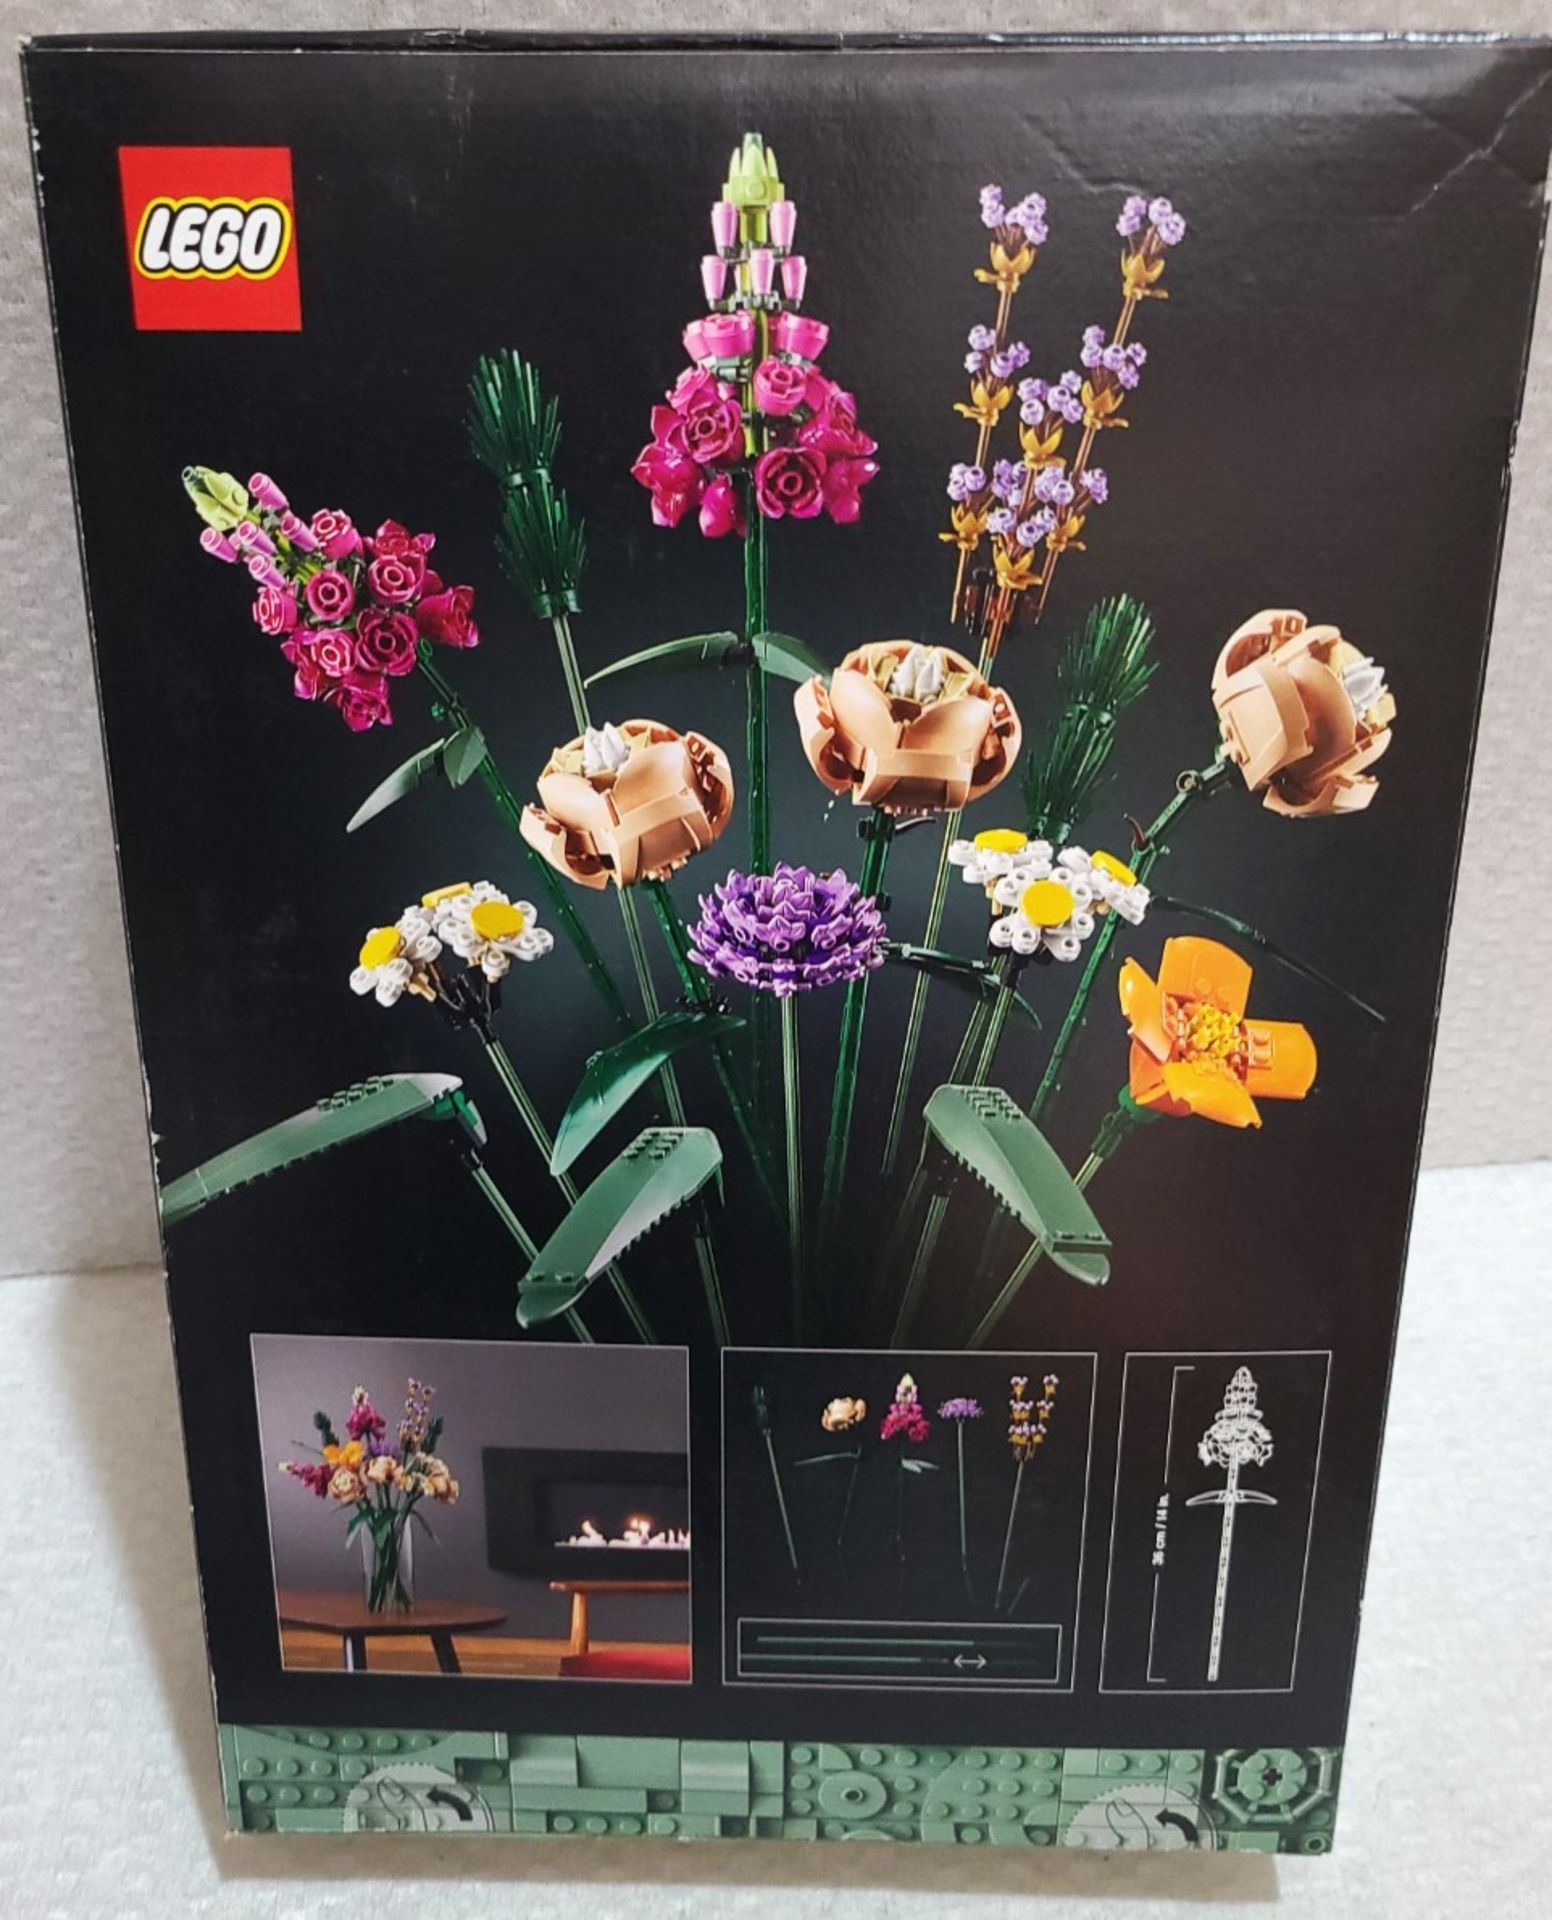 1 x LEGO Creator Expert Flower Bouquet Set 10280 - Original Price £54.95 - Image 4 of 4